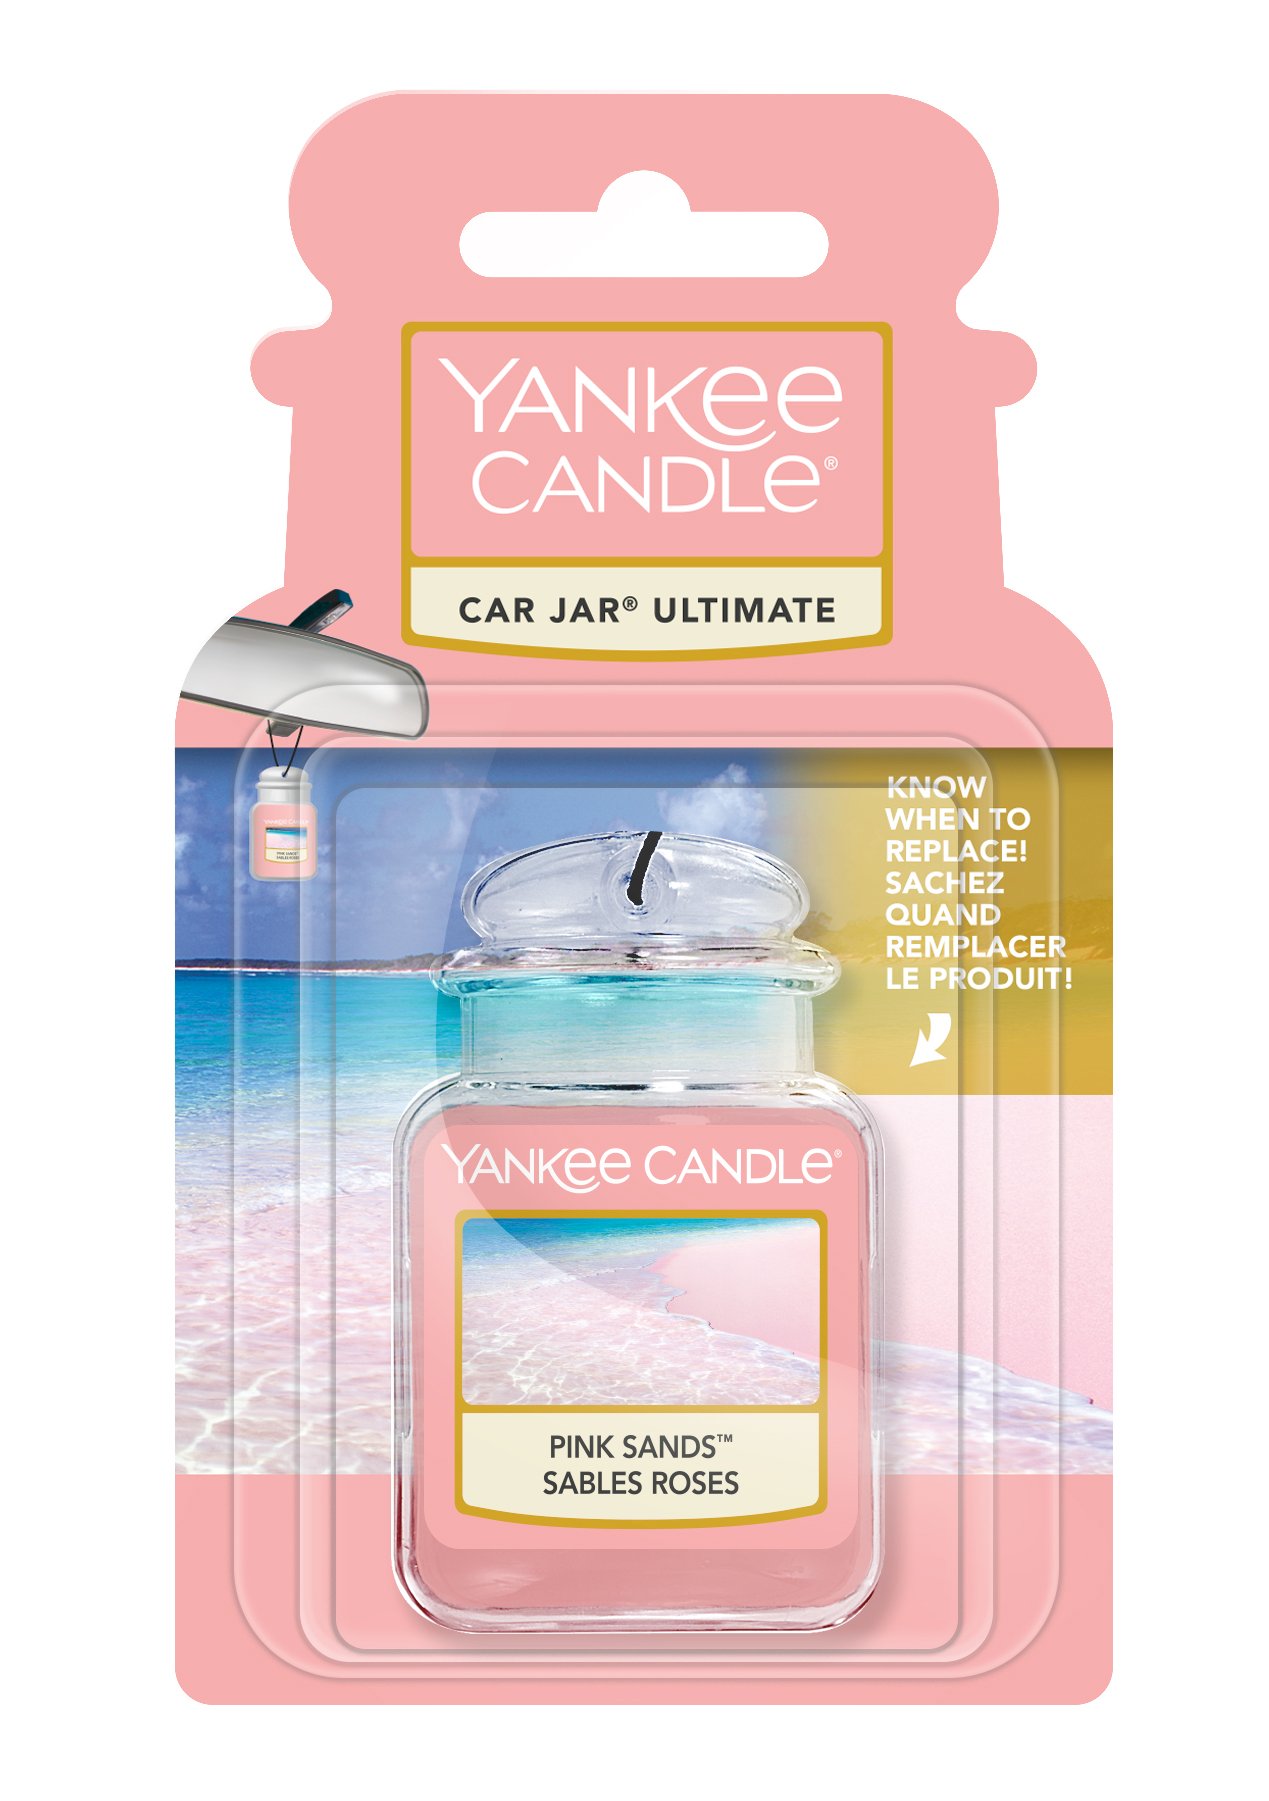 Pink Sands™ Car Jar® Ultimate - Car Jar® Ultimate